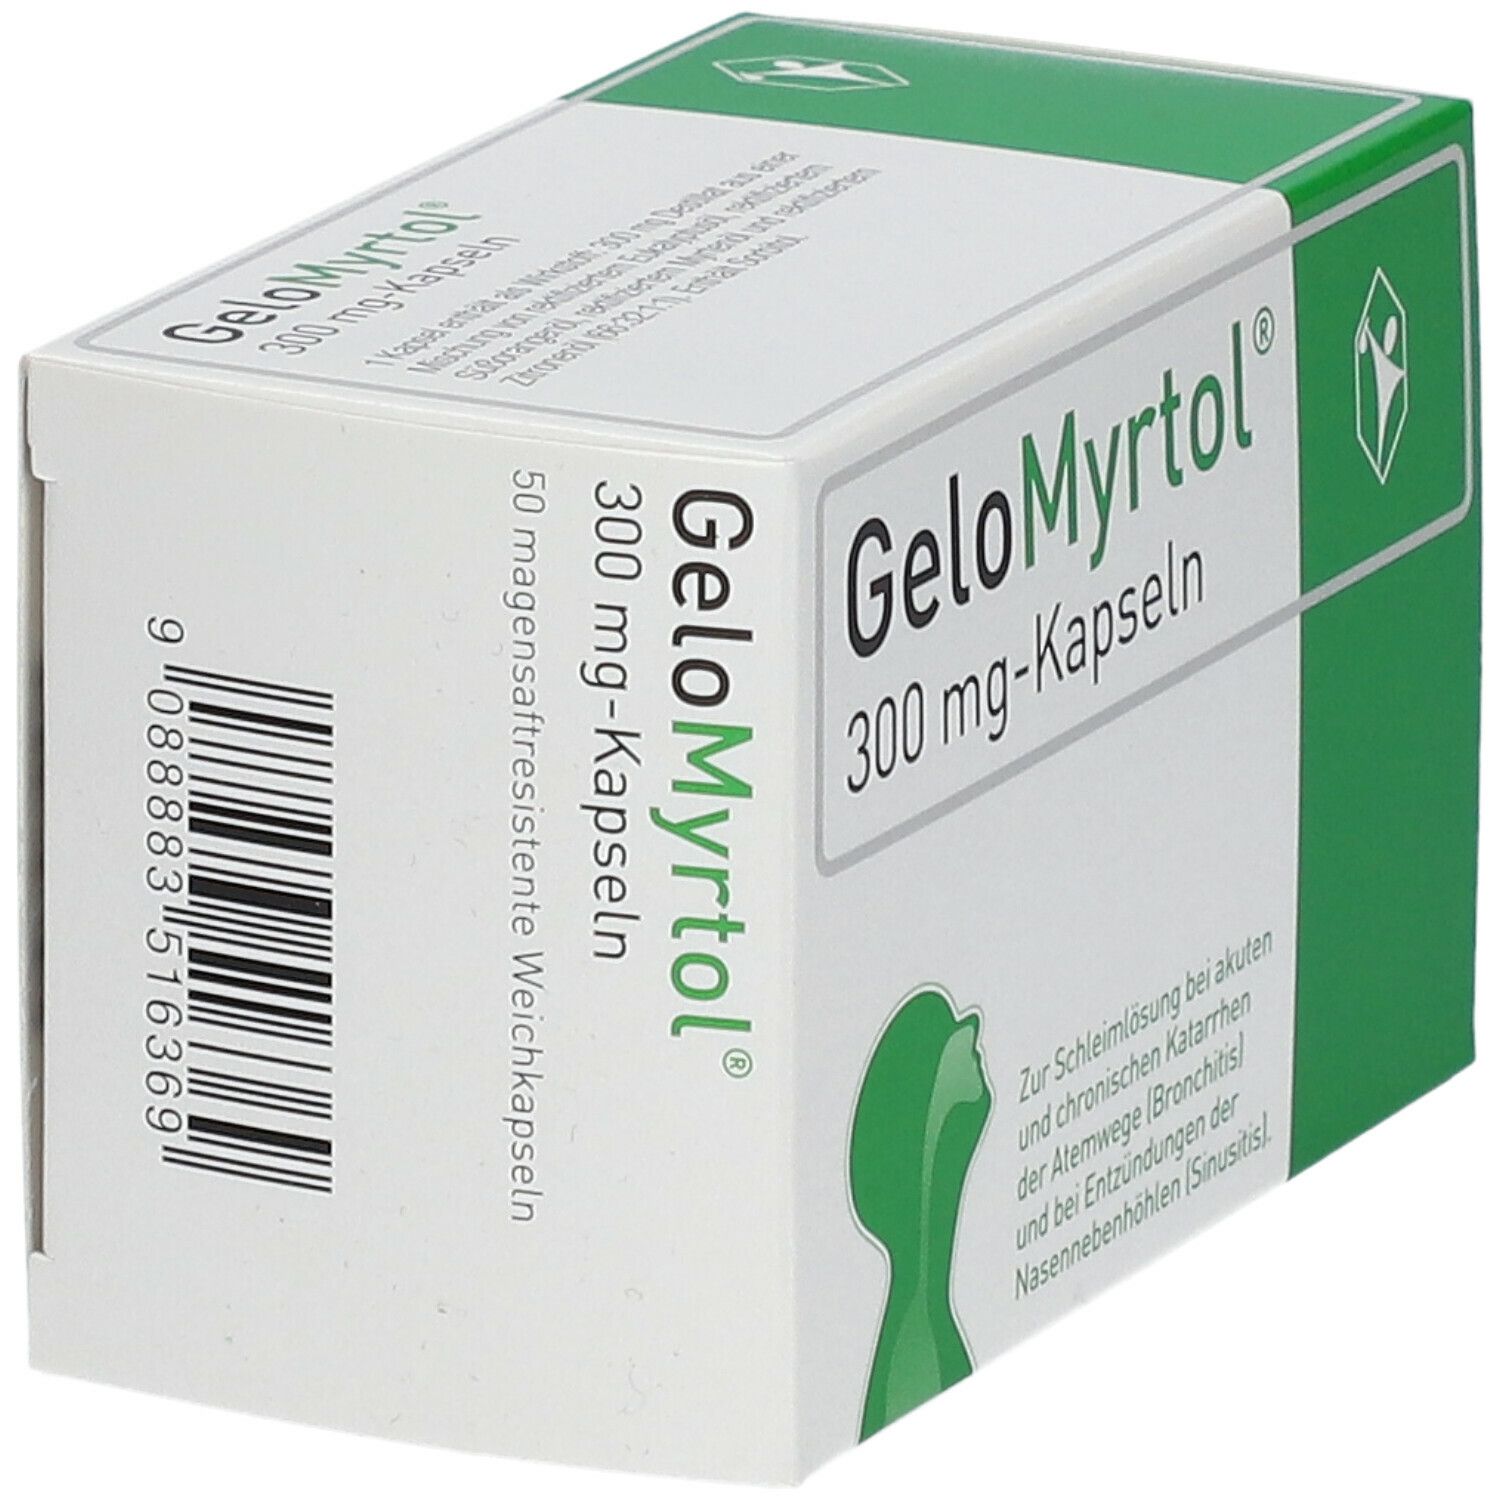 GeloMyrtol® 300 mg